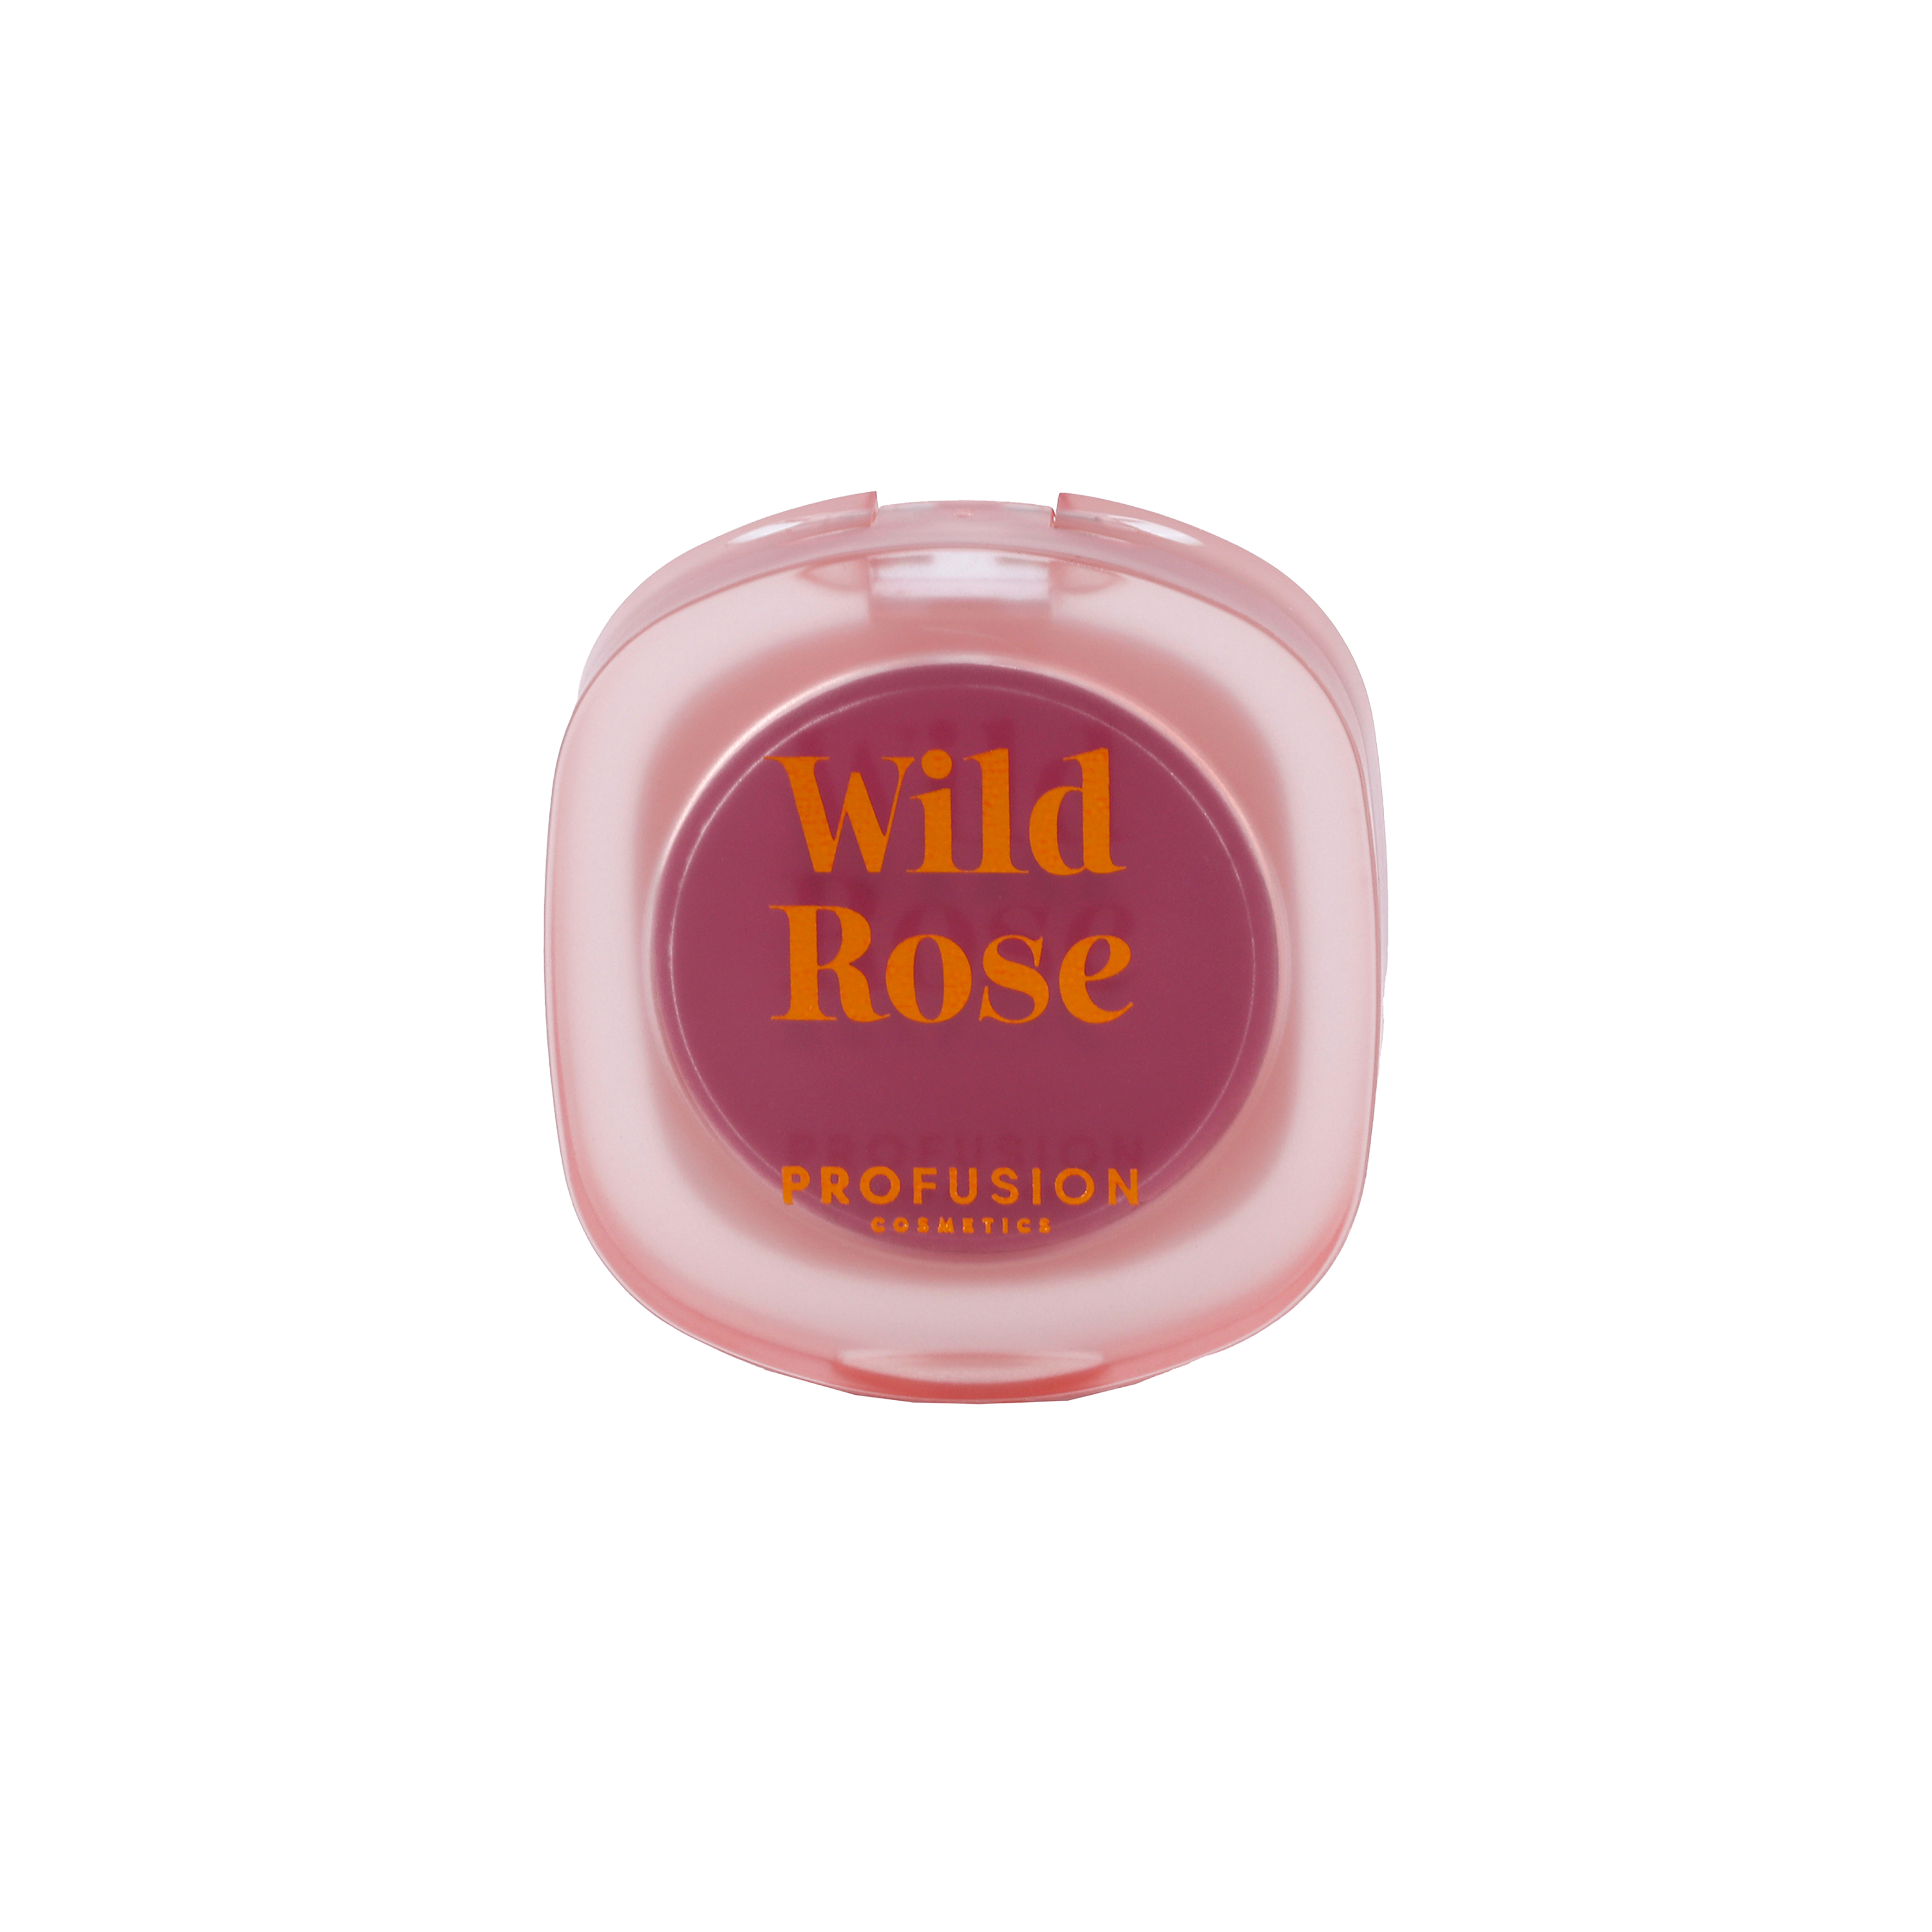 Petal Perfect | Wild Rose Lip & Cheek Cream Blush